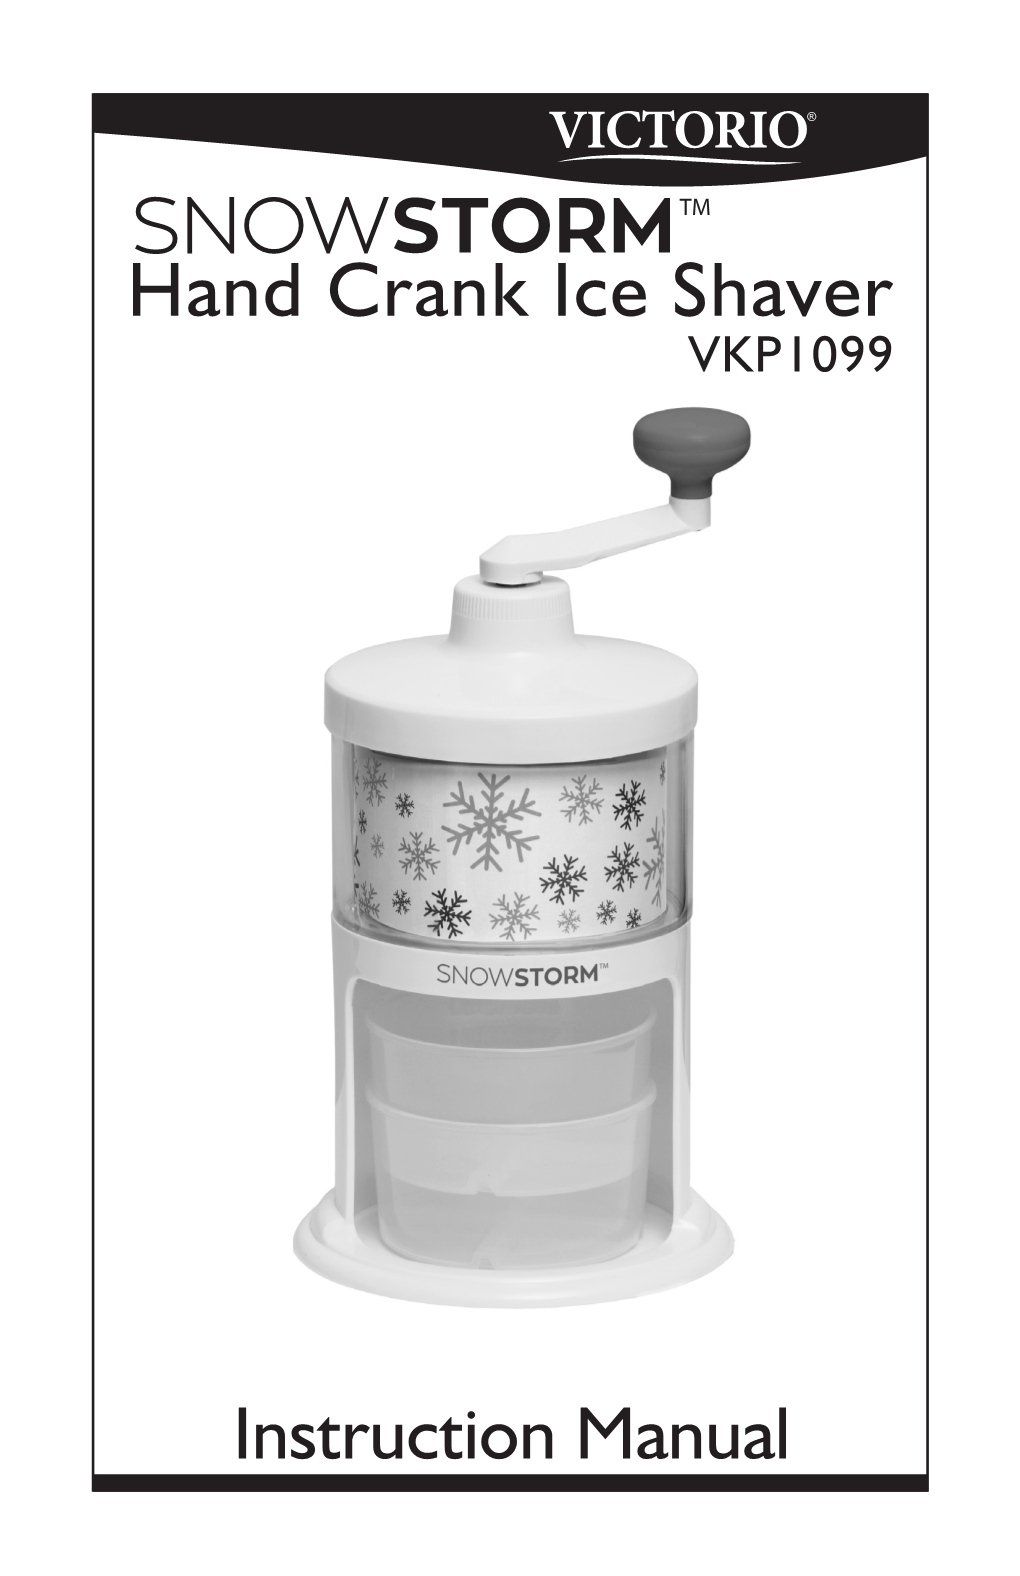 Hand Crank Ice Shaver VKP1099 Manual